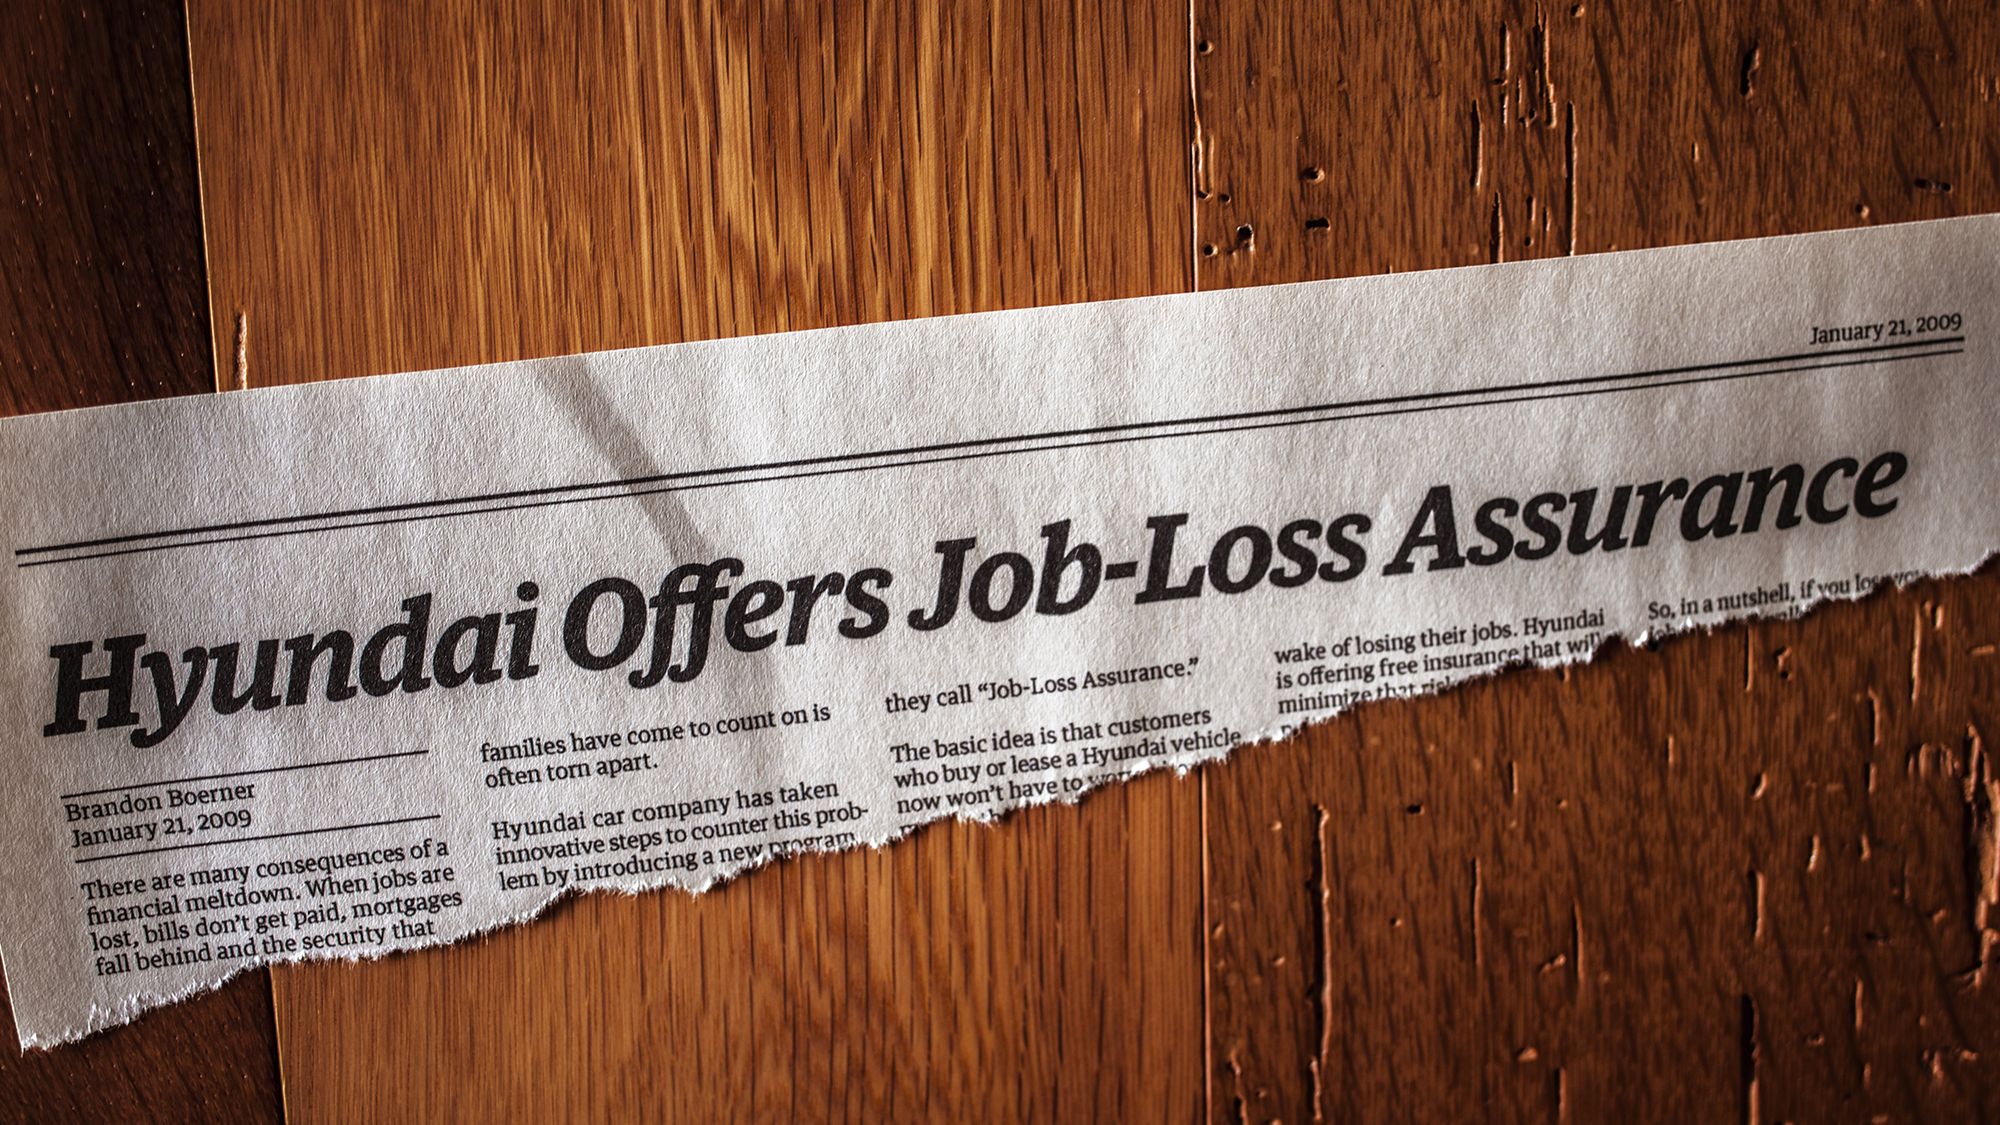 Recorte de periódico de enero 2009 con un titular que dice "Hyundai Offers Job-Loss Assurance" (Hyundai ofrece un seguro por desempleo)